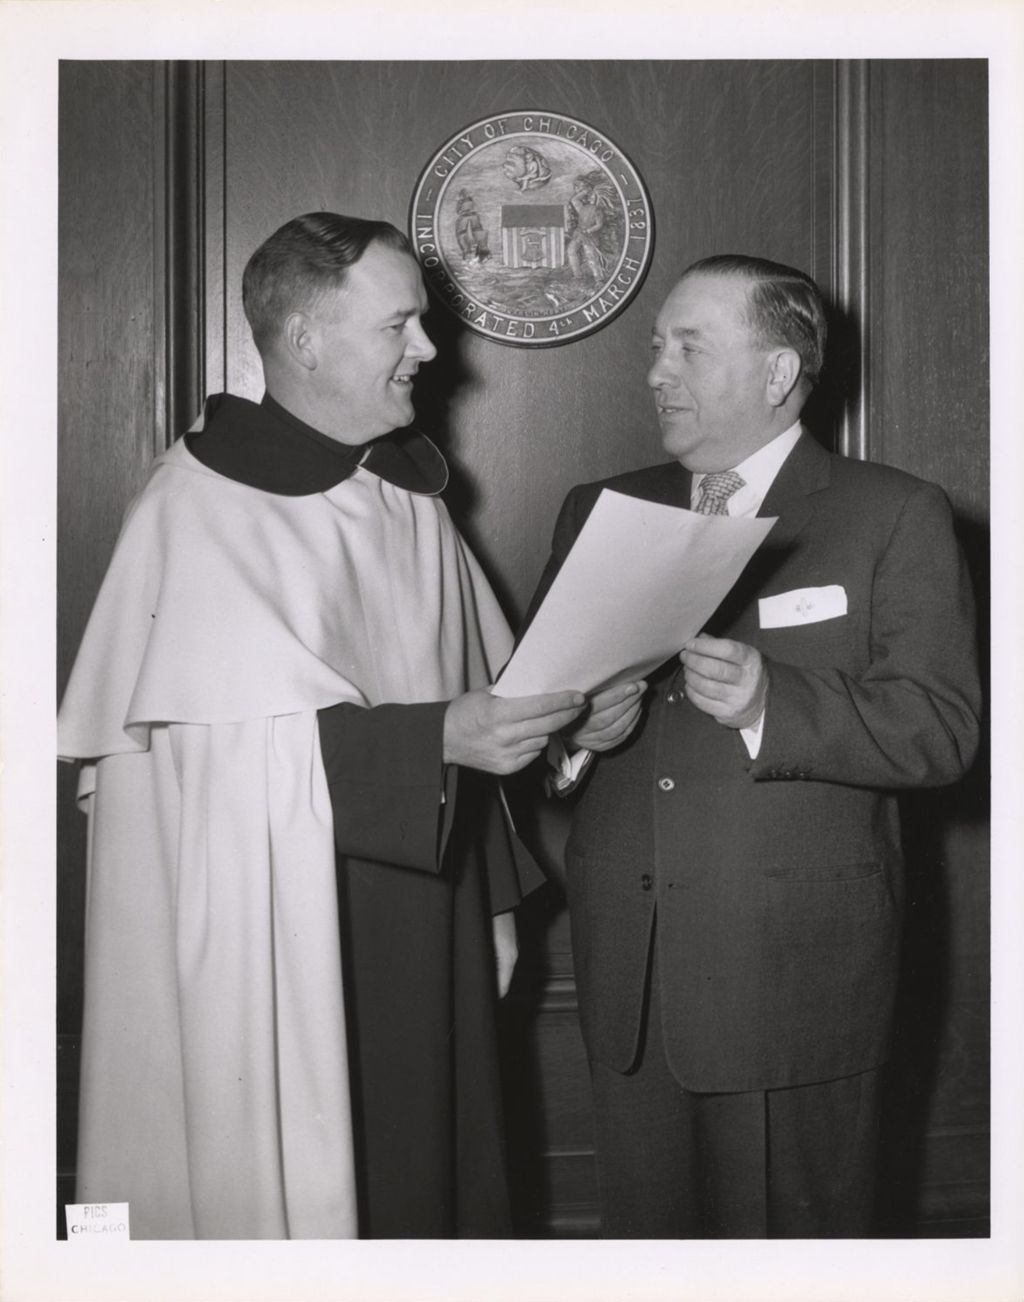 Richard J. Daley and a clergyman